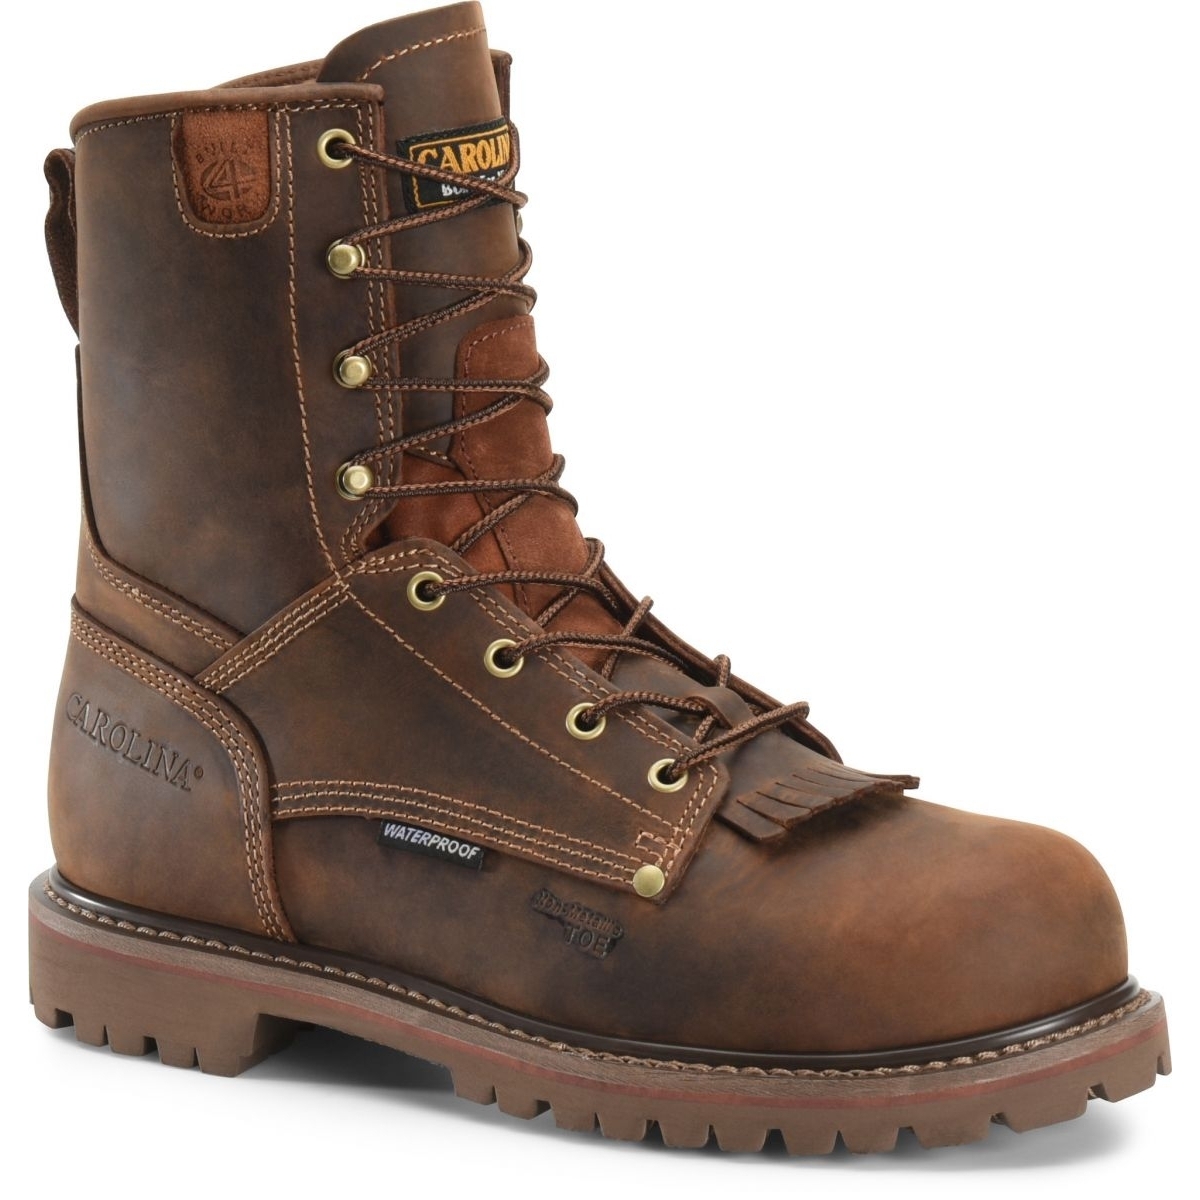 CAROLINA Men's 28 Series 8 Composite Toe Waterproof Work Boot Brown - CA8528 DARK BROWN - DARK BROWN, 9.5 Wide